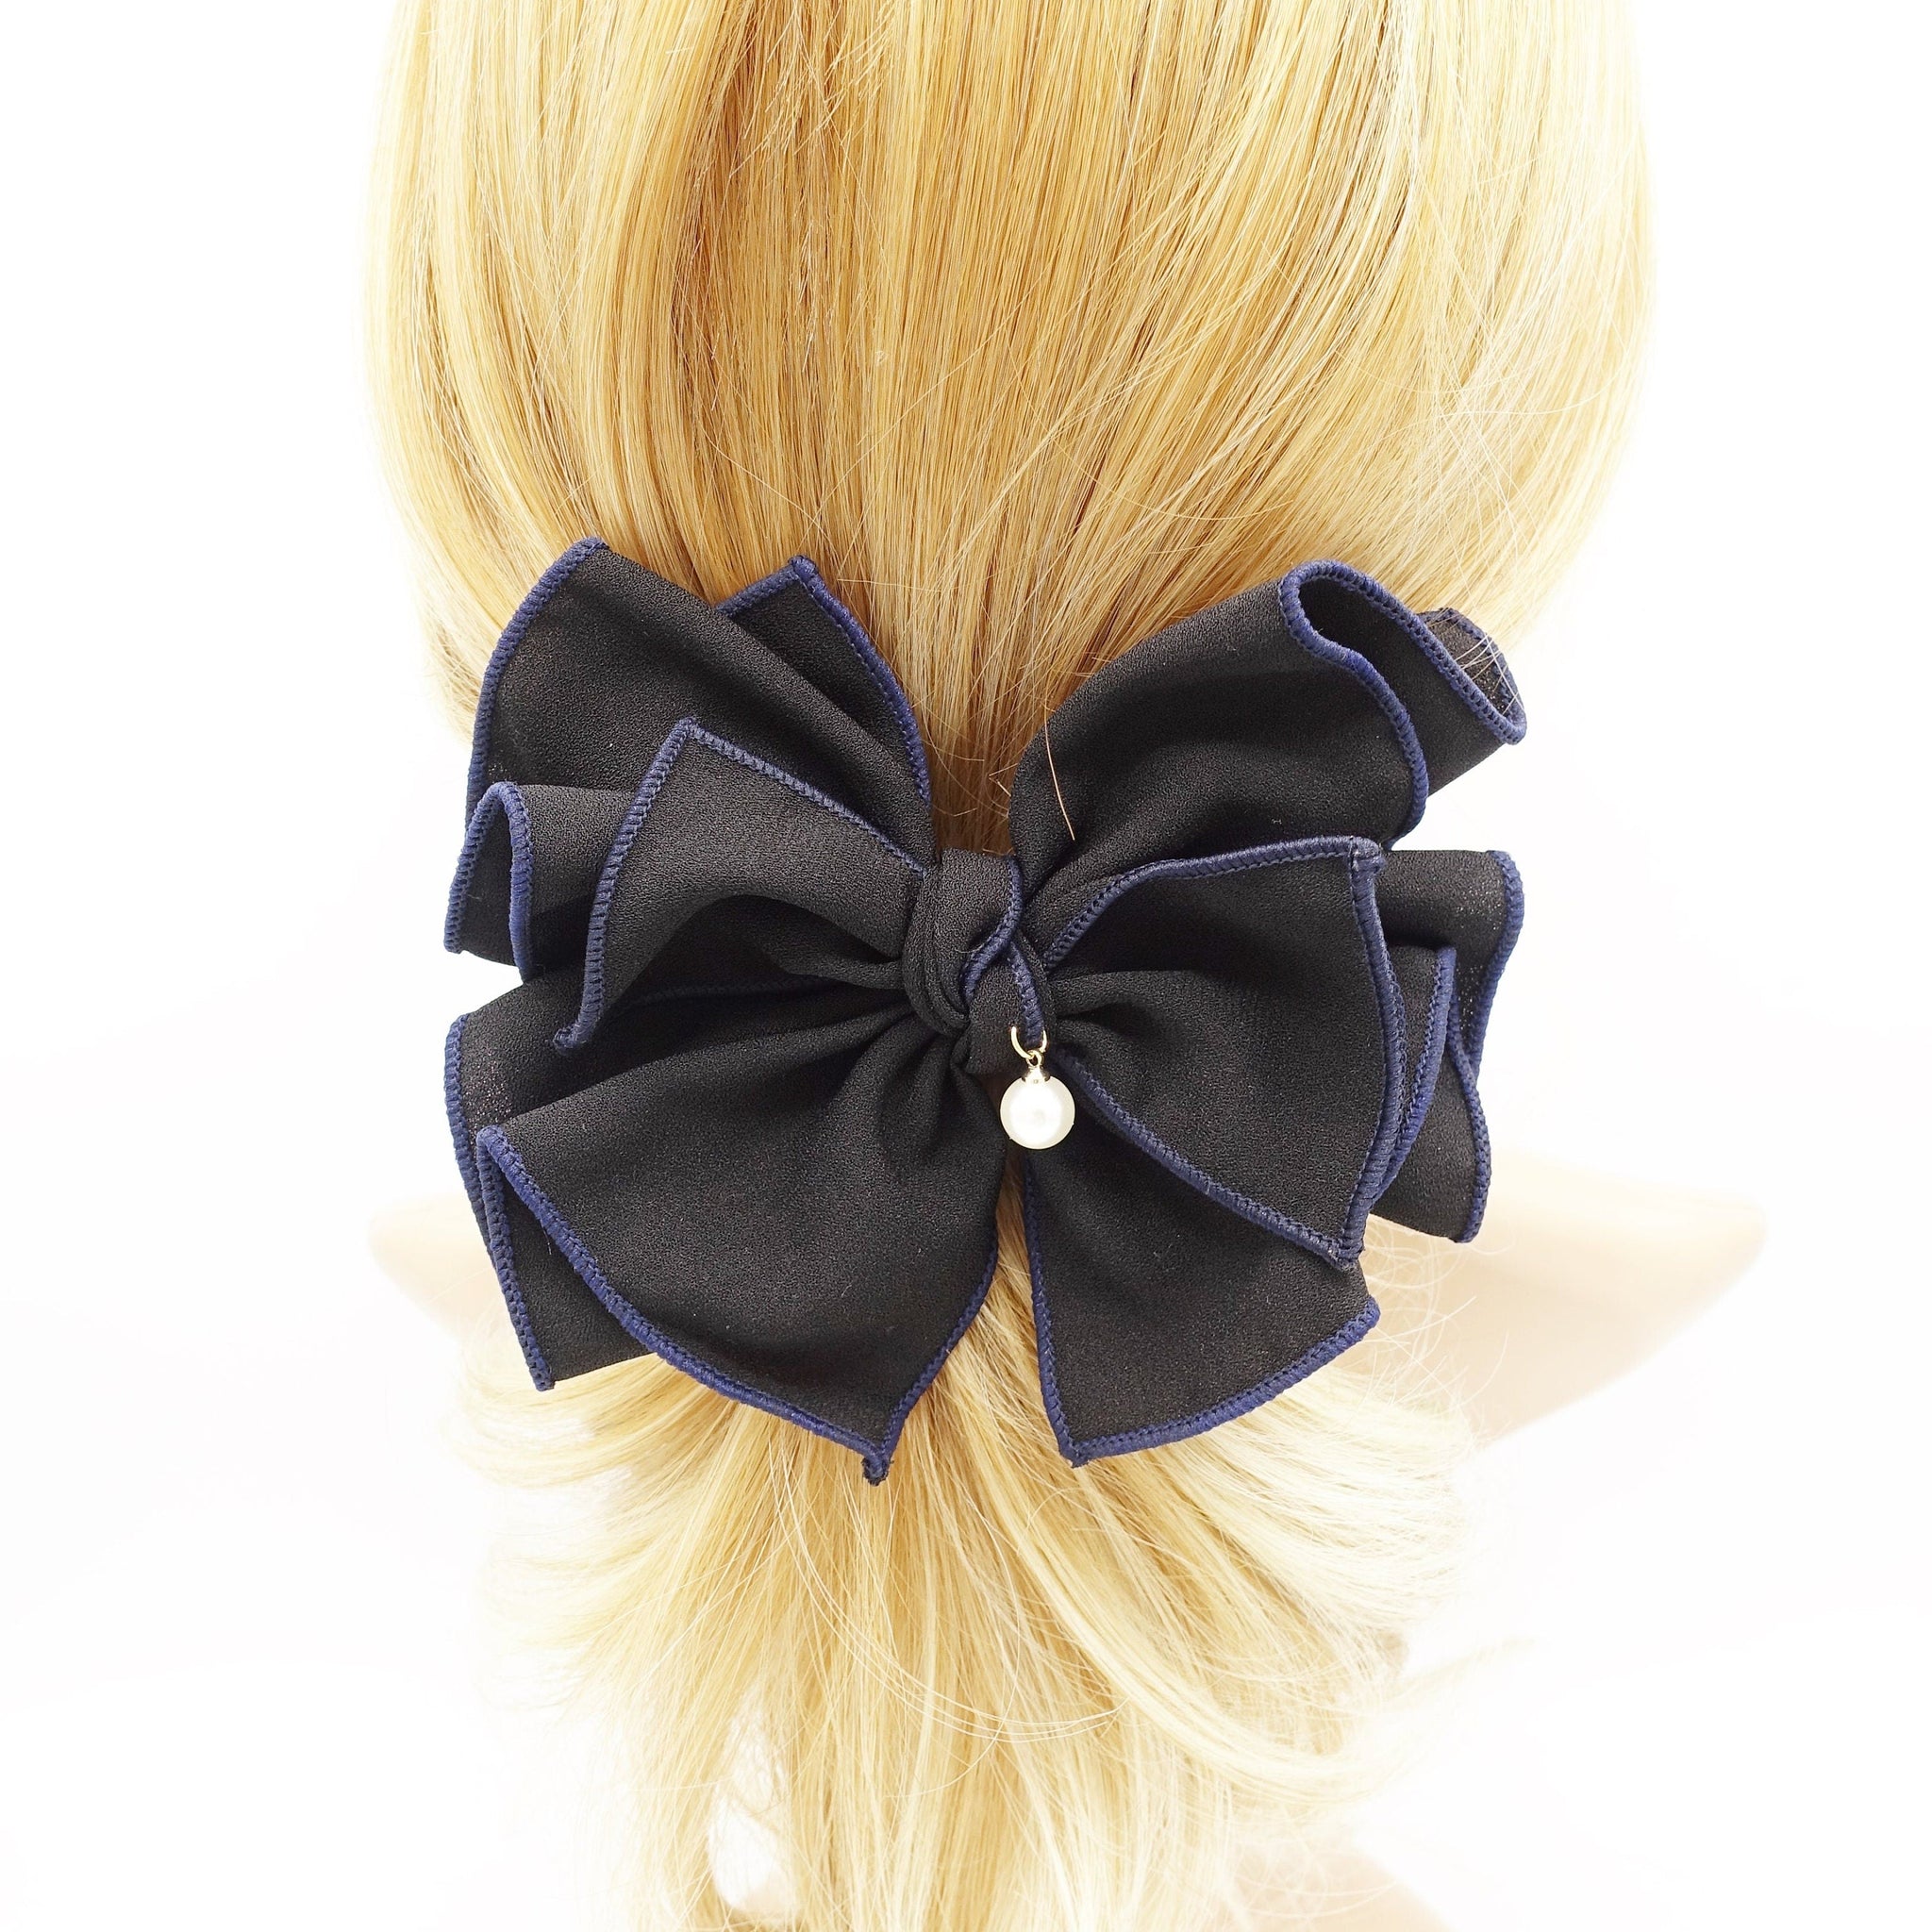 veryshine.com Barrette (Bow) Black double colored edge hair bow pleated women hair accessory